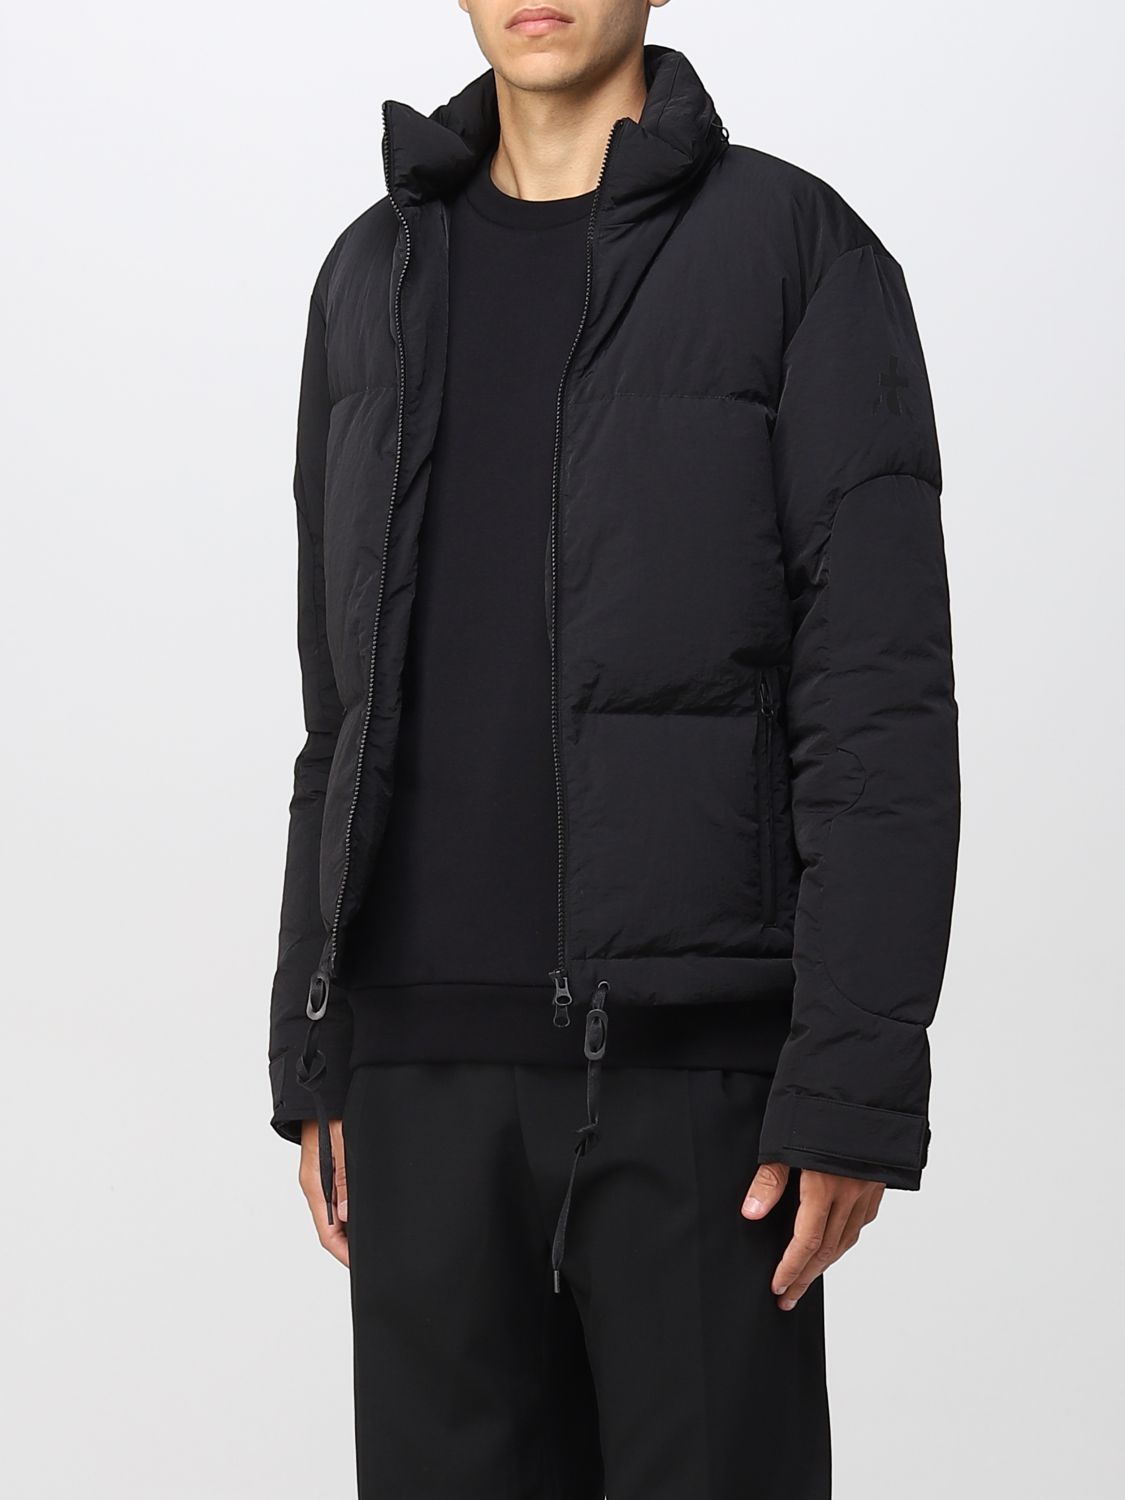 PREMIATA: jacket for man - Black | Premiata jacket PR01U200 online on ...